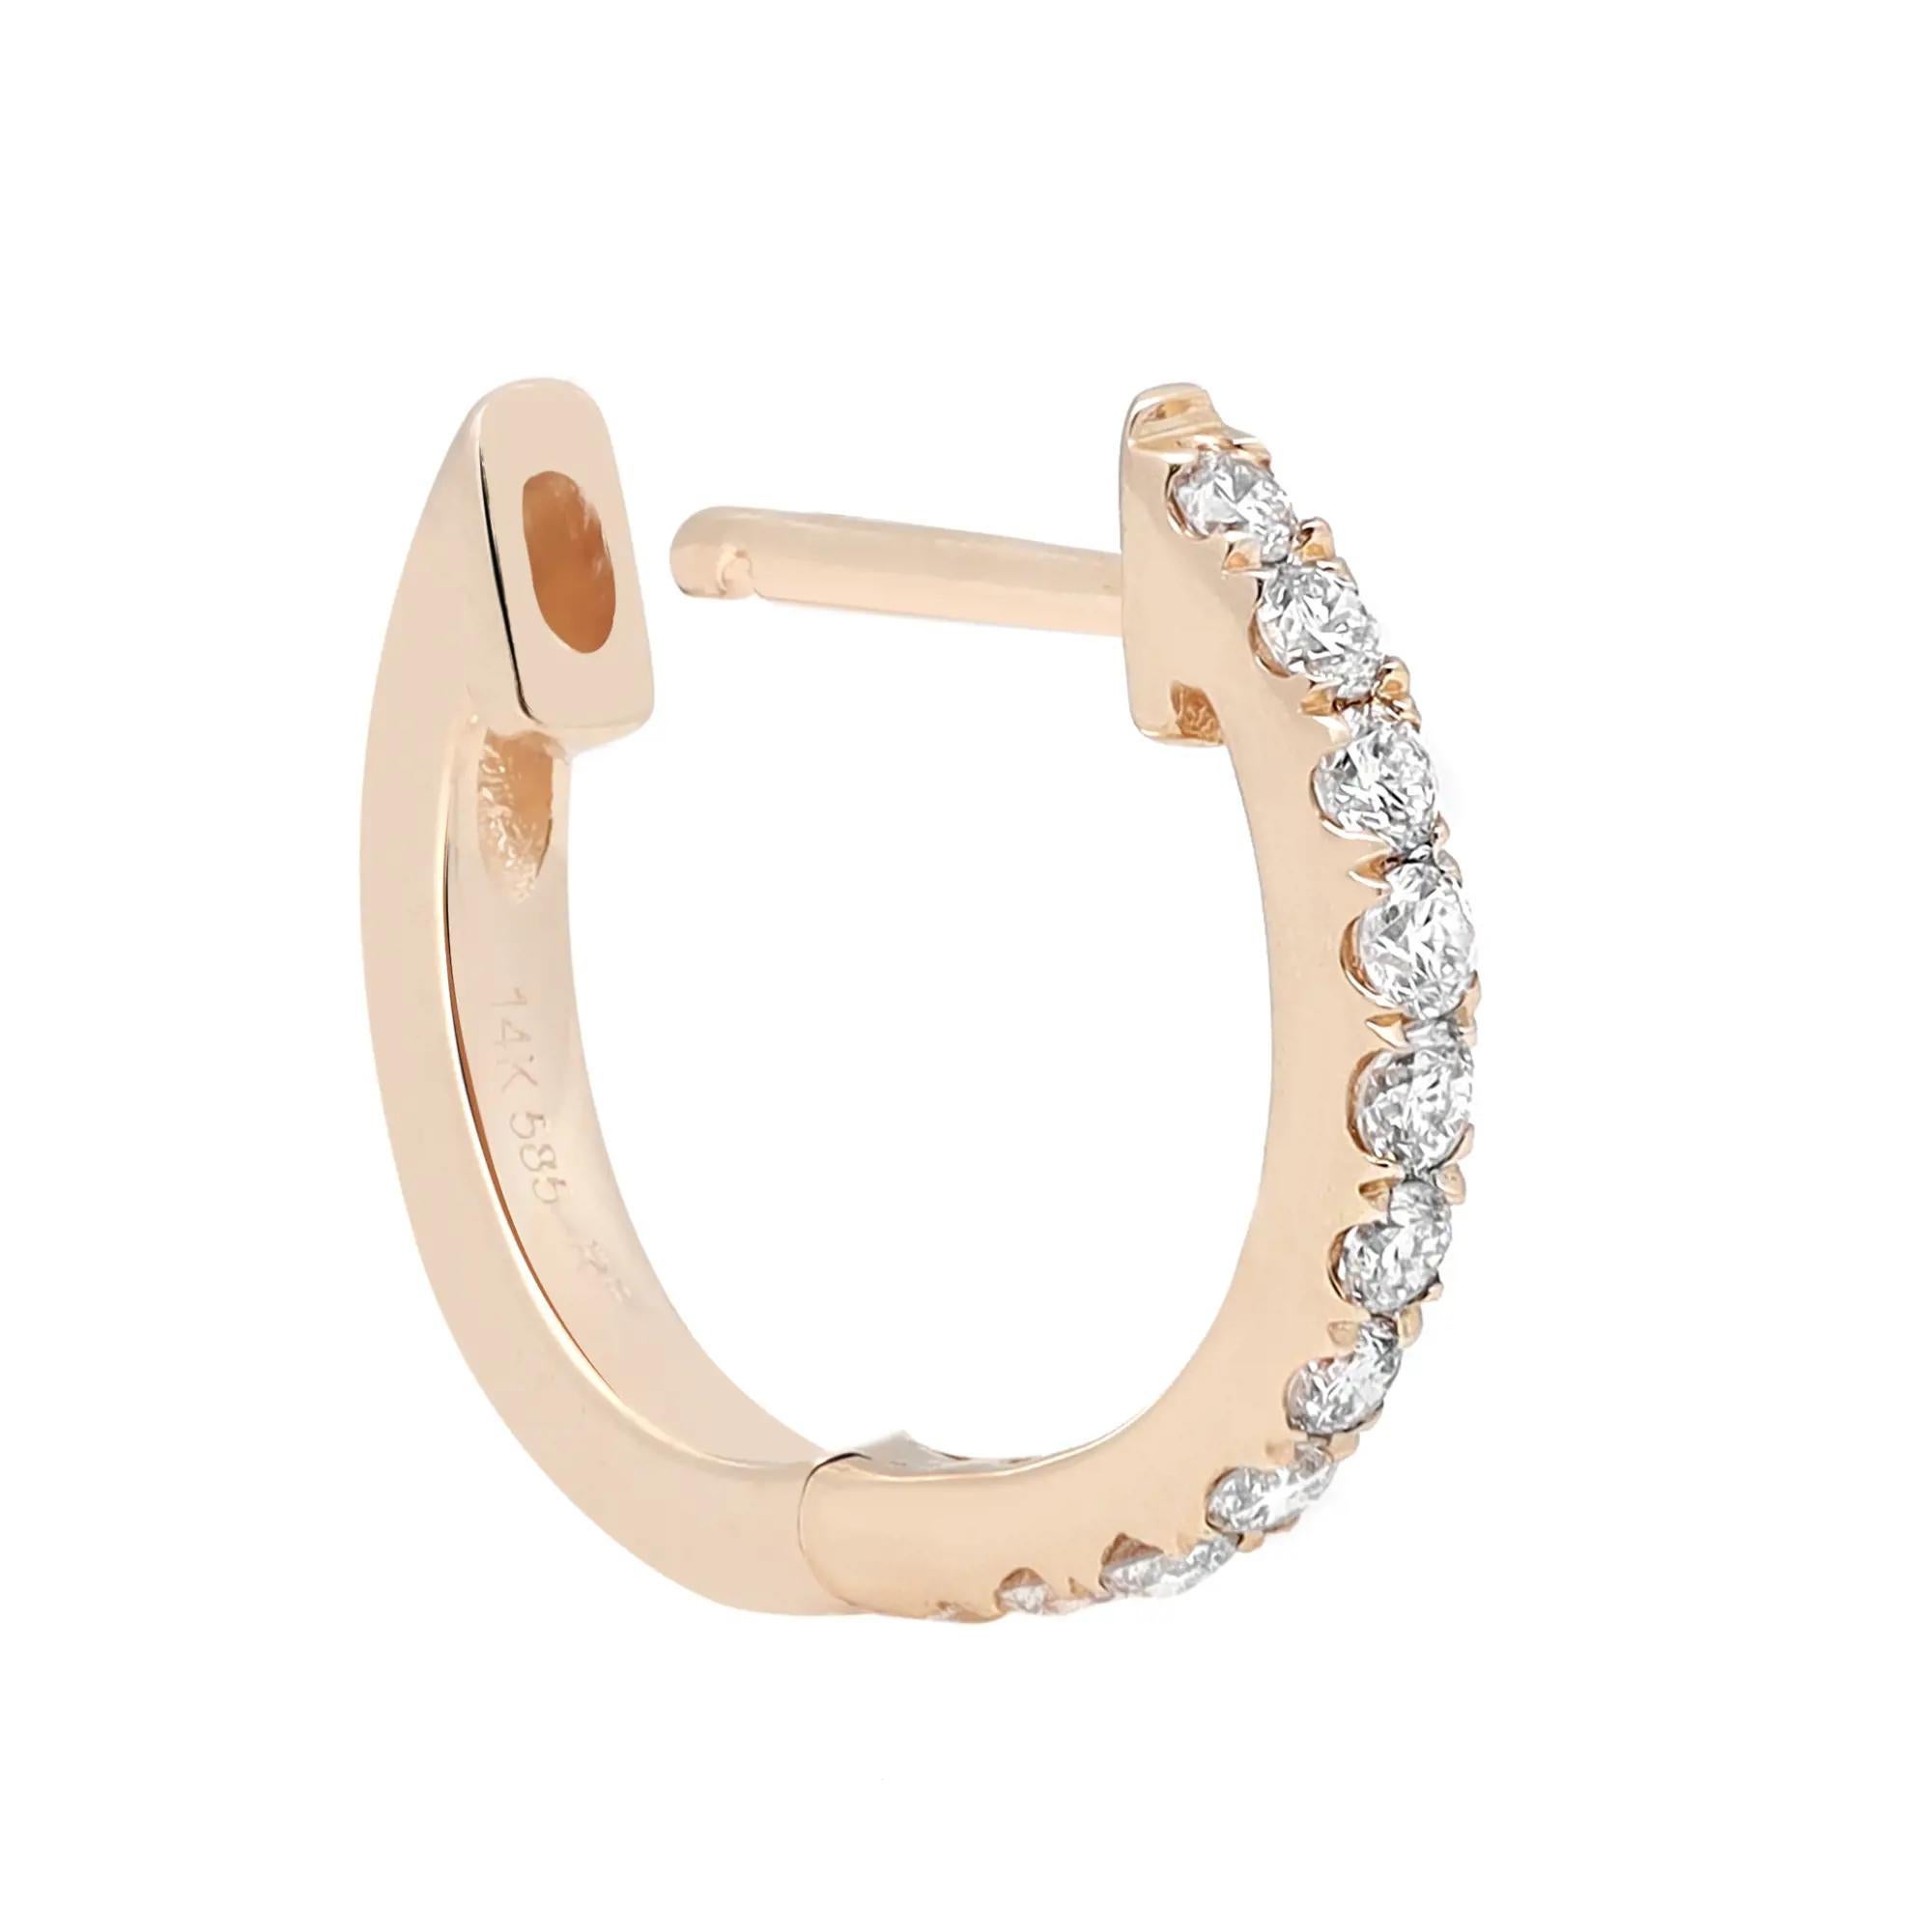 Rachel Koen 0.21cttw Round Cut Diamond Huggie Earrings 14K Yellow Gold In New Condition For Sale In New York, NY